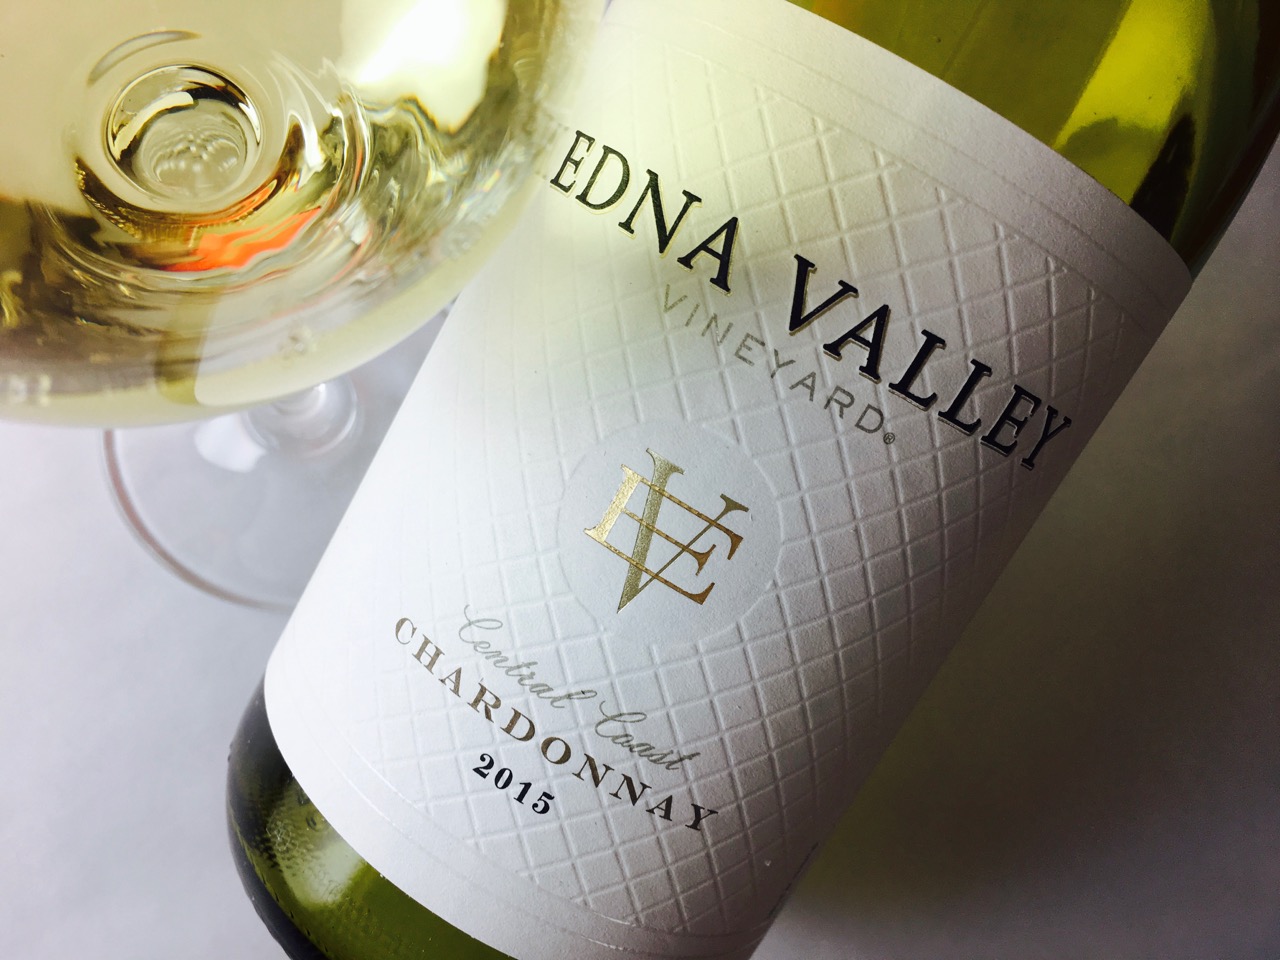 2015 Edna Valley Vineyard Chardonnay Central Coast